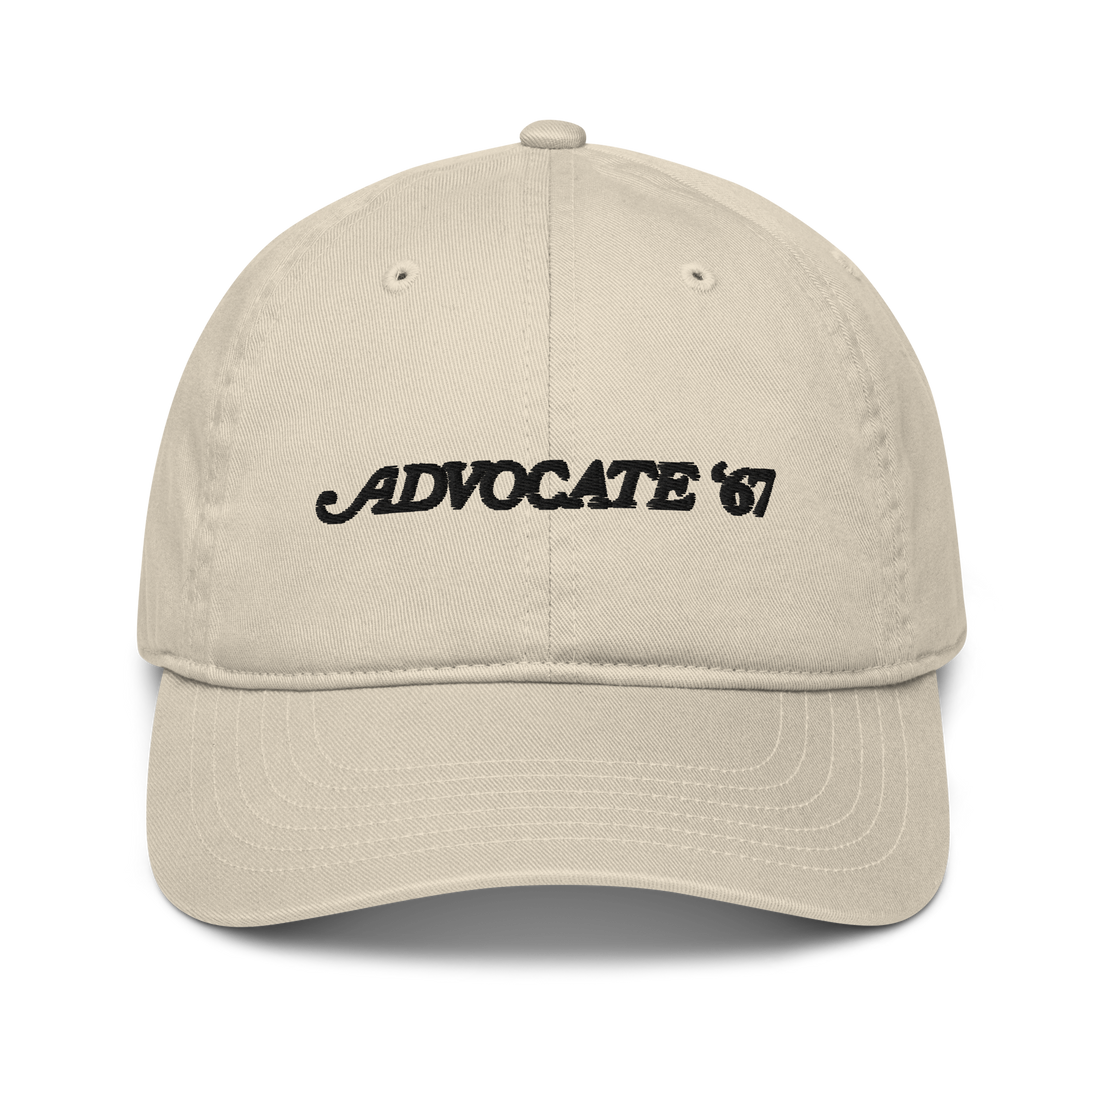 The Advocate ‘67 Organic Dad Hat